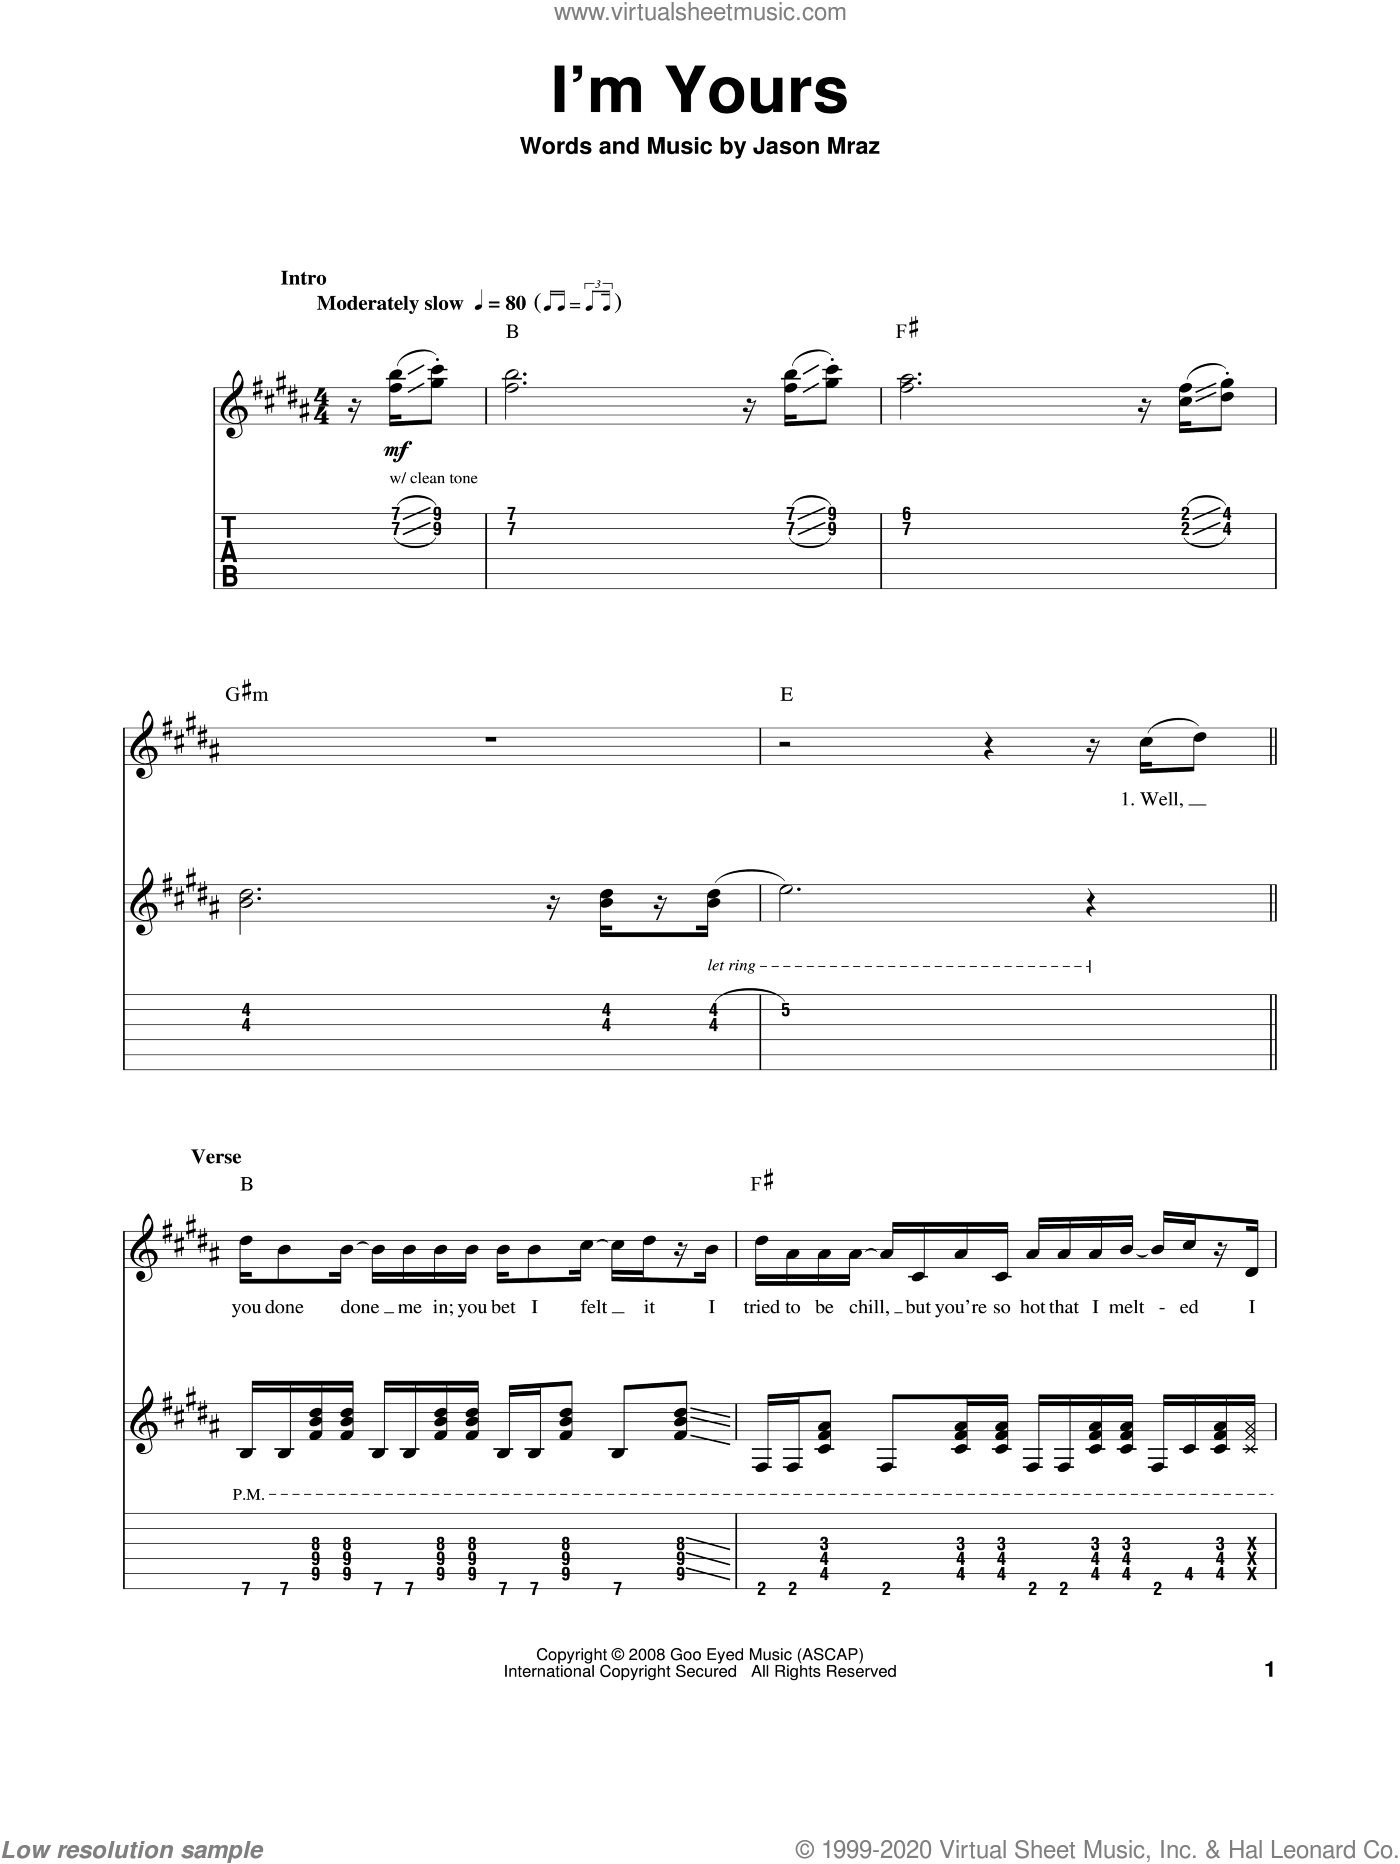 Mraz - I'm Yours sheet music (intermediate) for guitar solo [PDF]